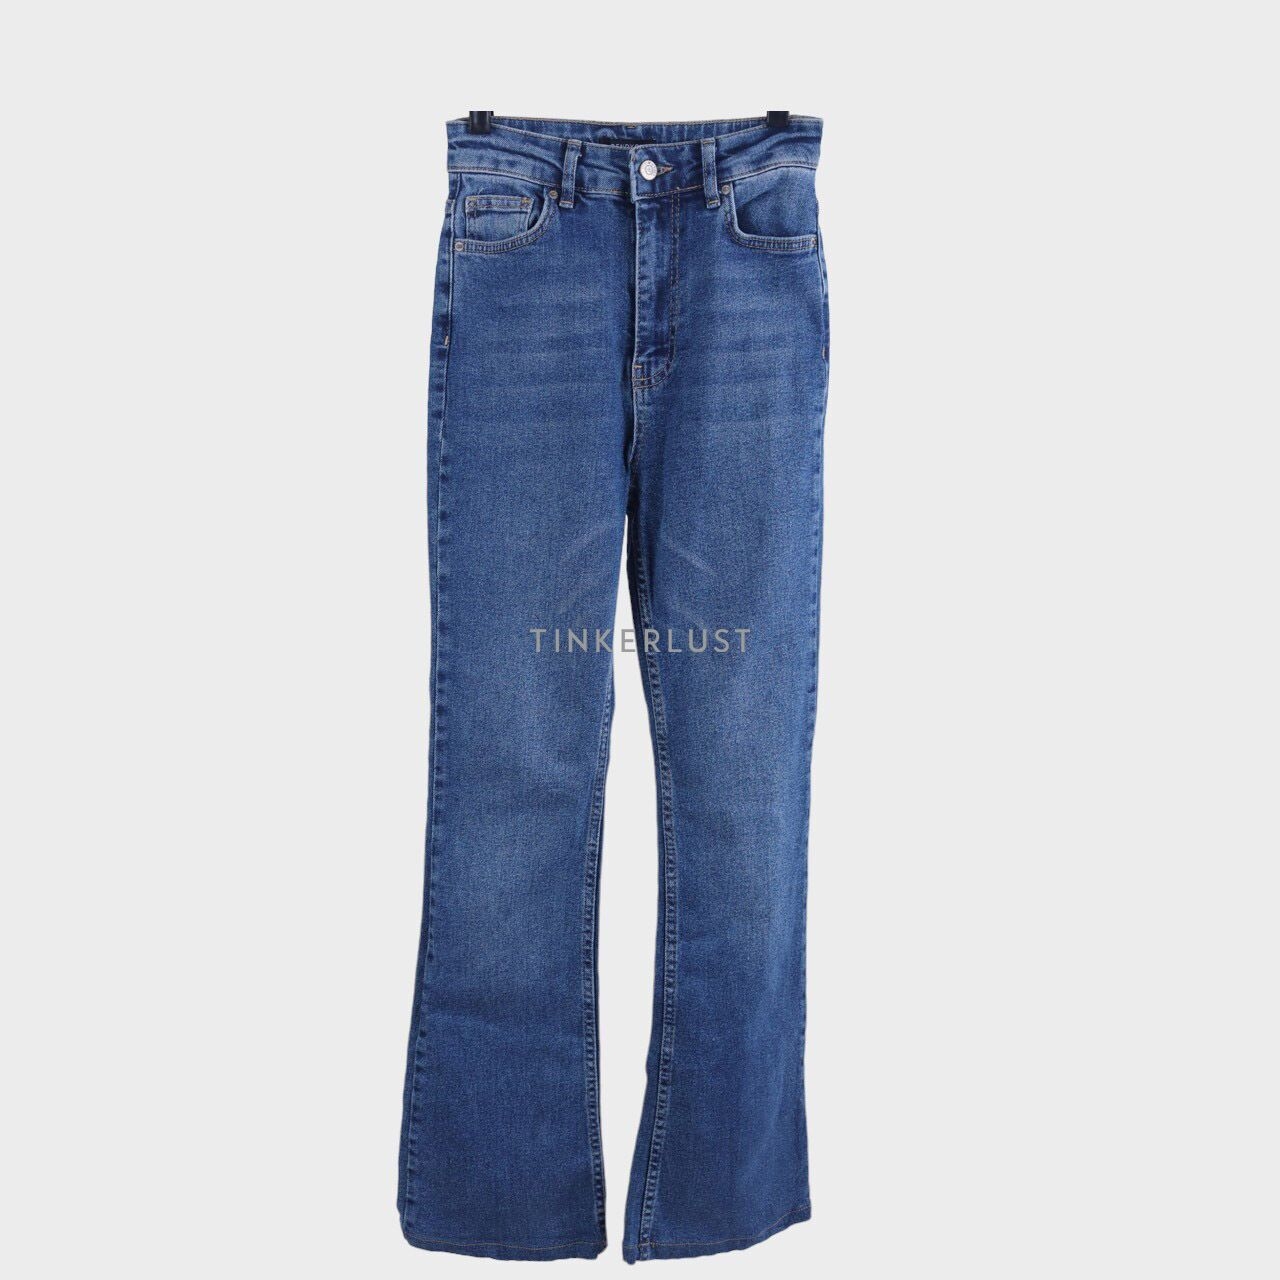 Trendyol Blue Jeans Long Pants